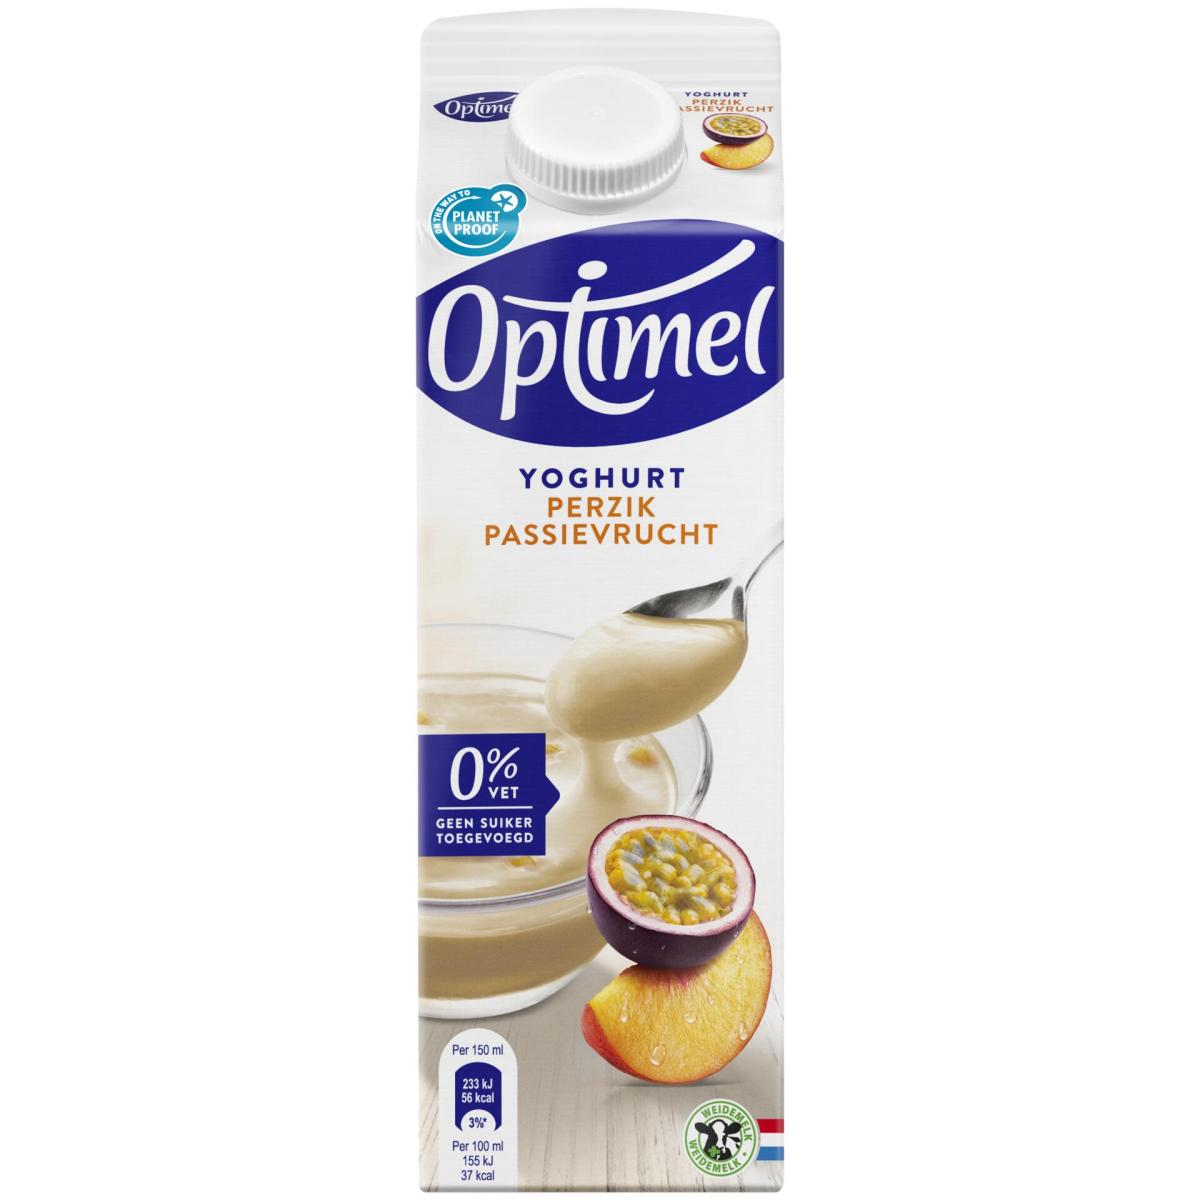 Optimel Magere yoghurt perzik passievrucht 0% vet 1L